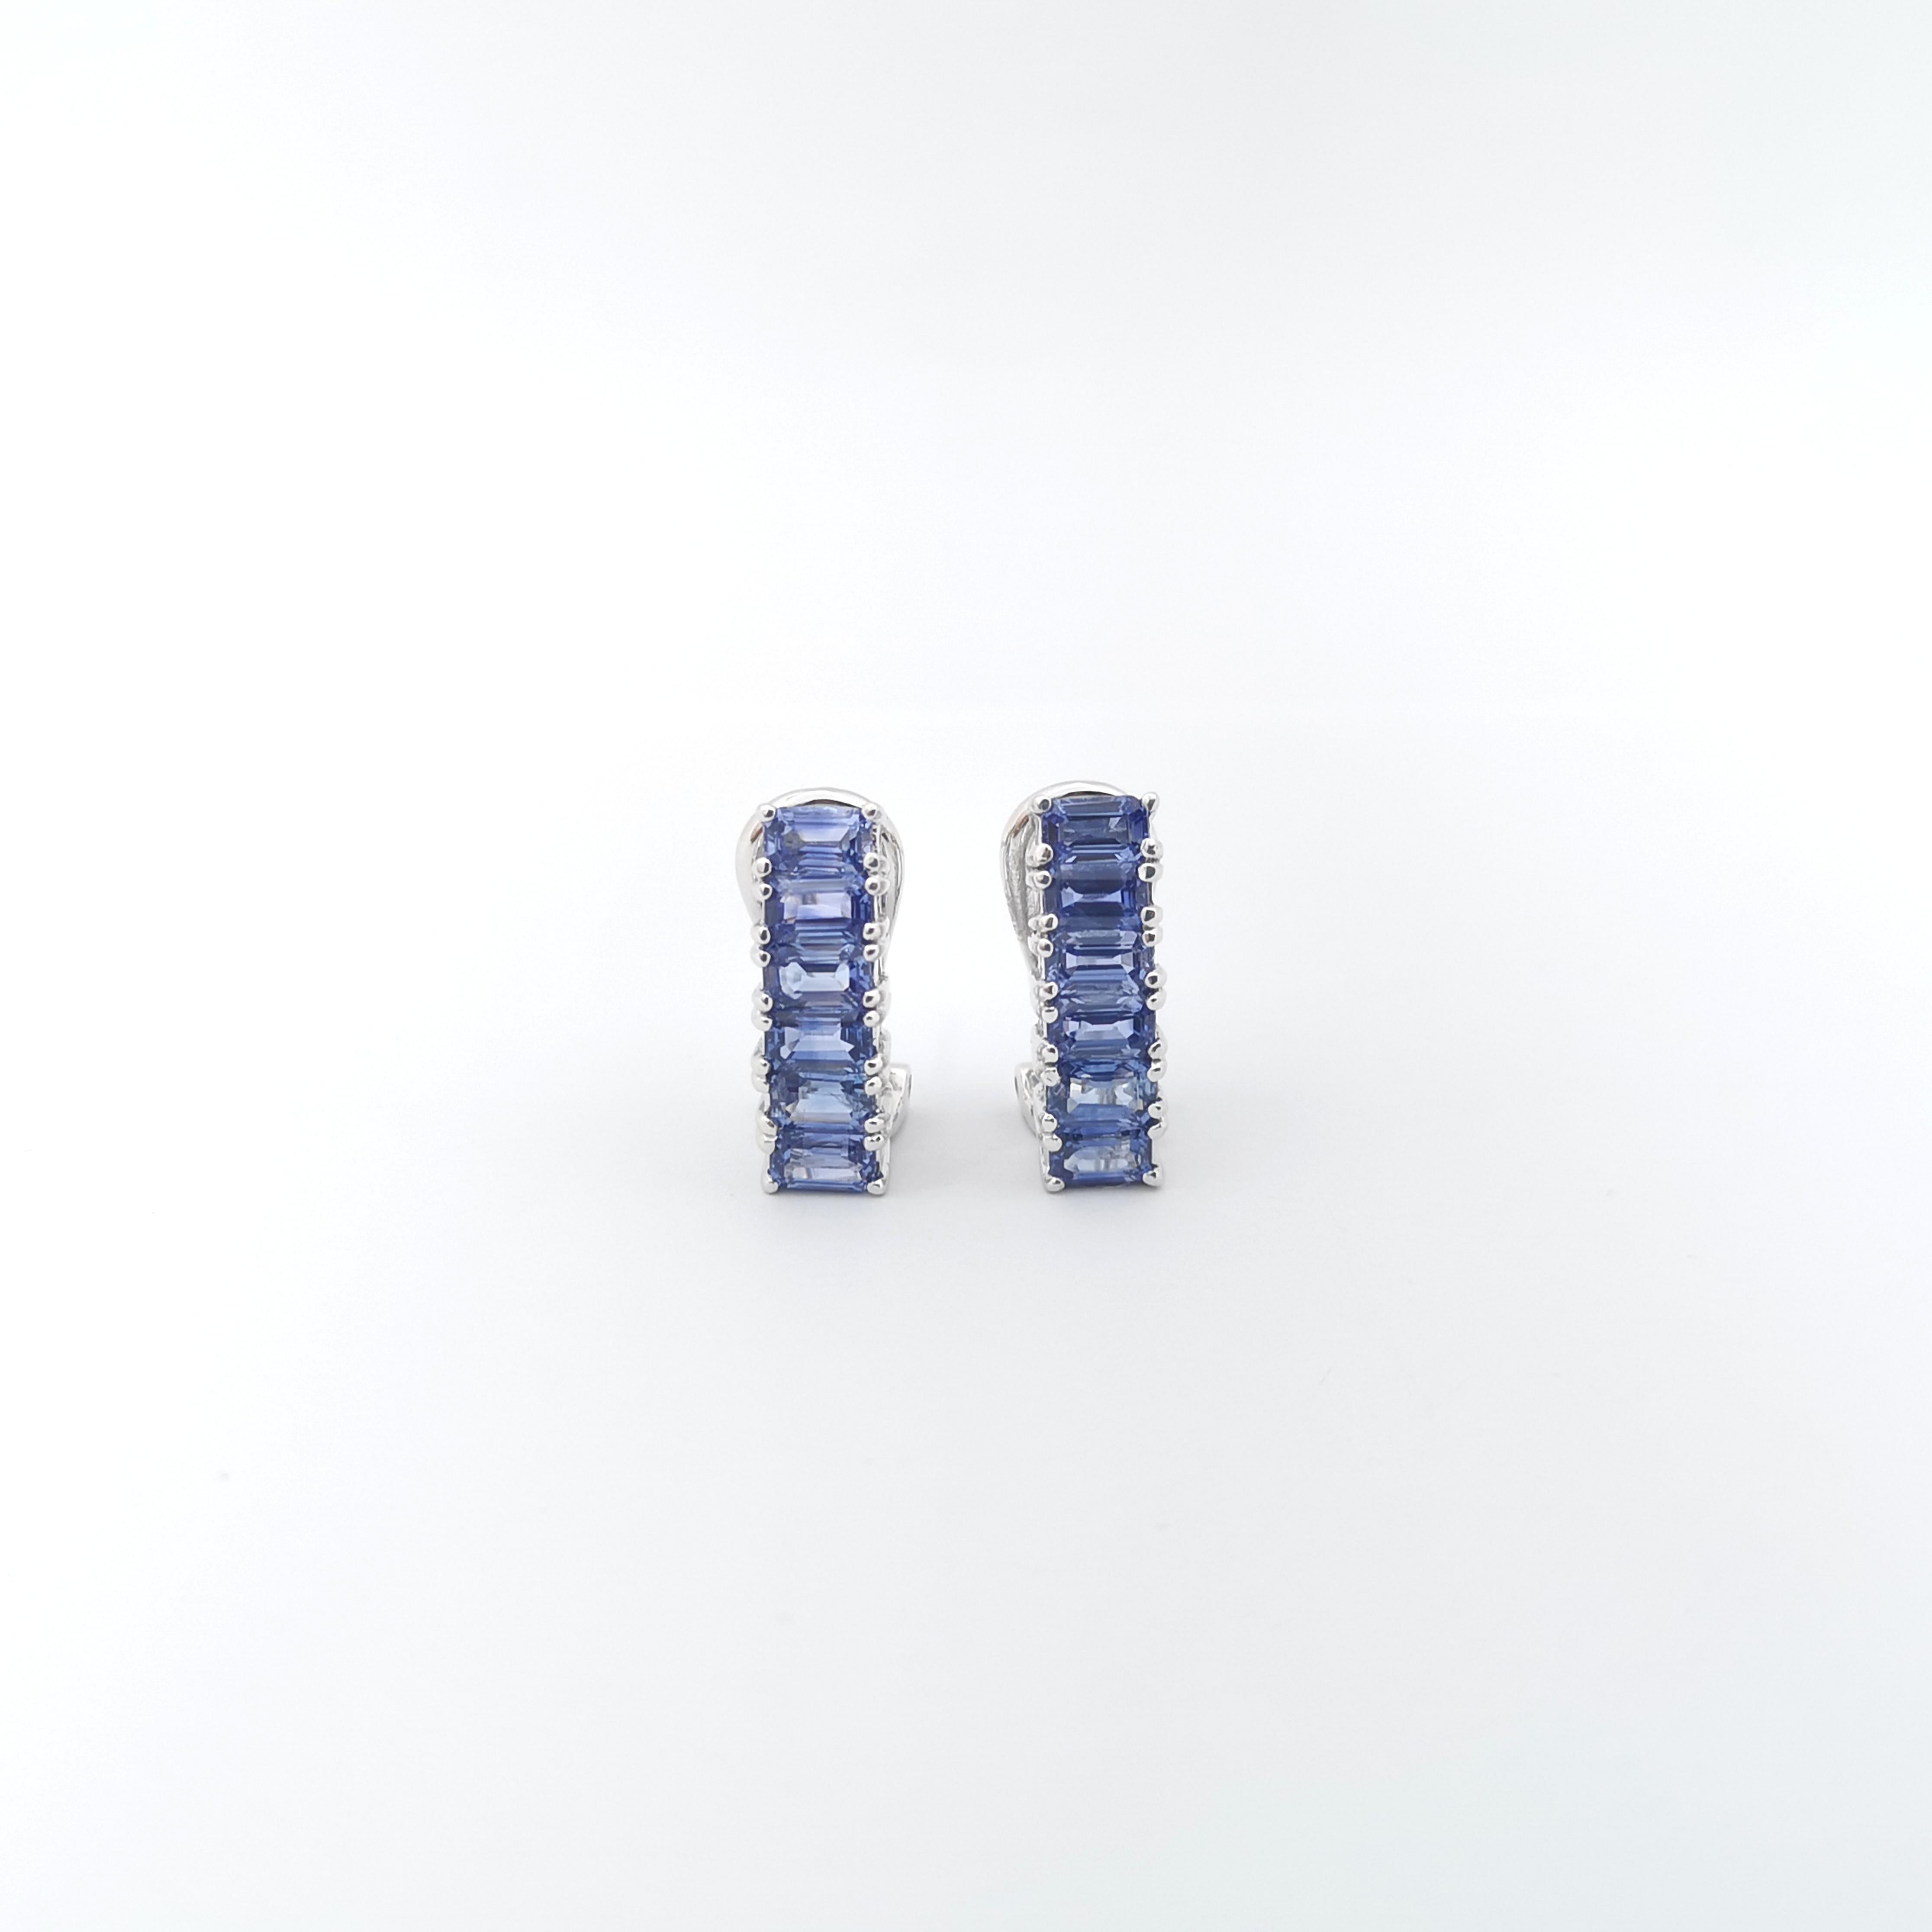 Emerald Cut Blue Sapphire Earrings set in 18K White Gold Settings For Sale